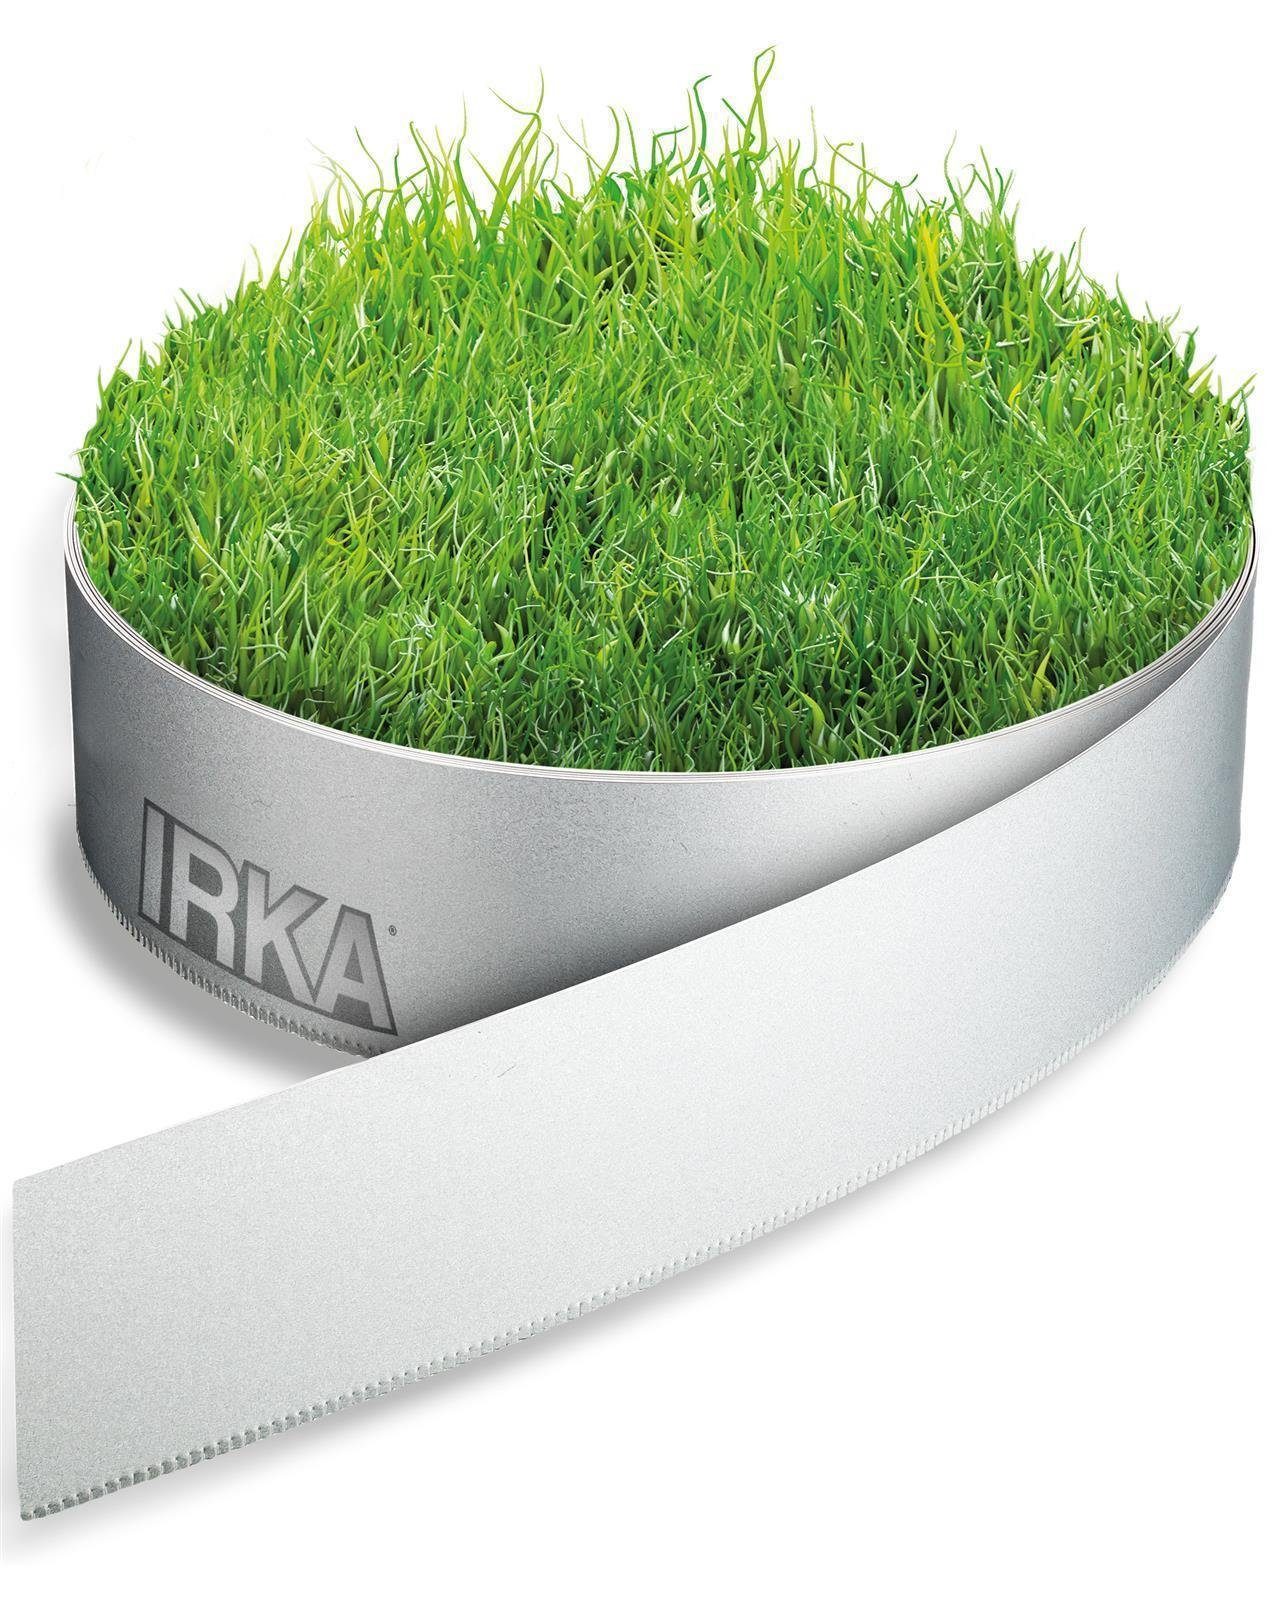 IRKA Rasenkante Rasenkantenband Alu/Zink 15 cm 10 Meter